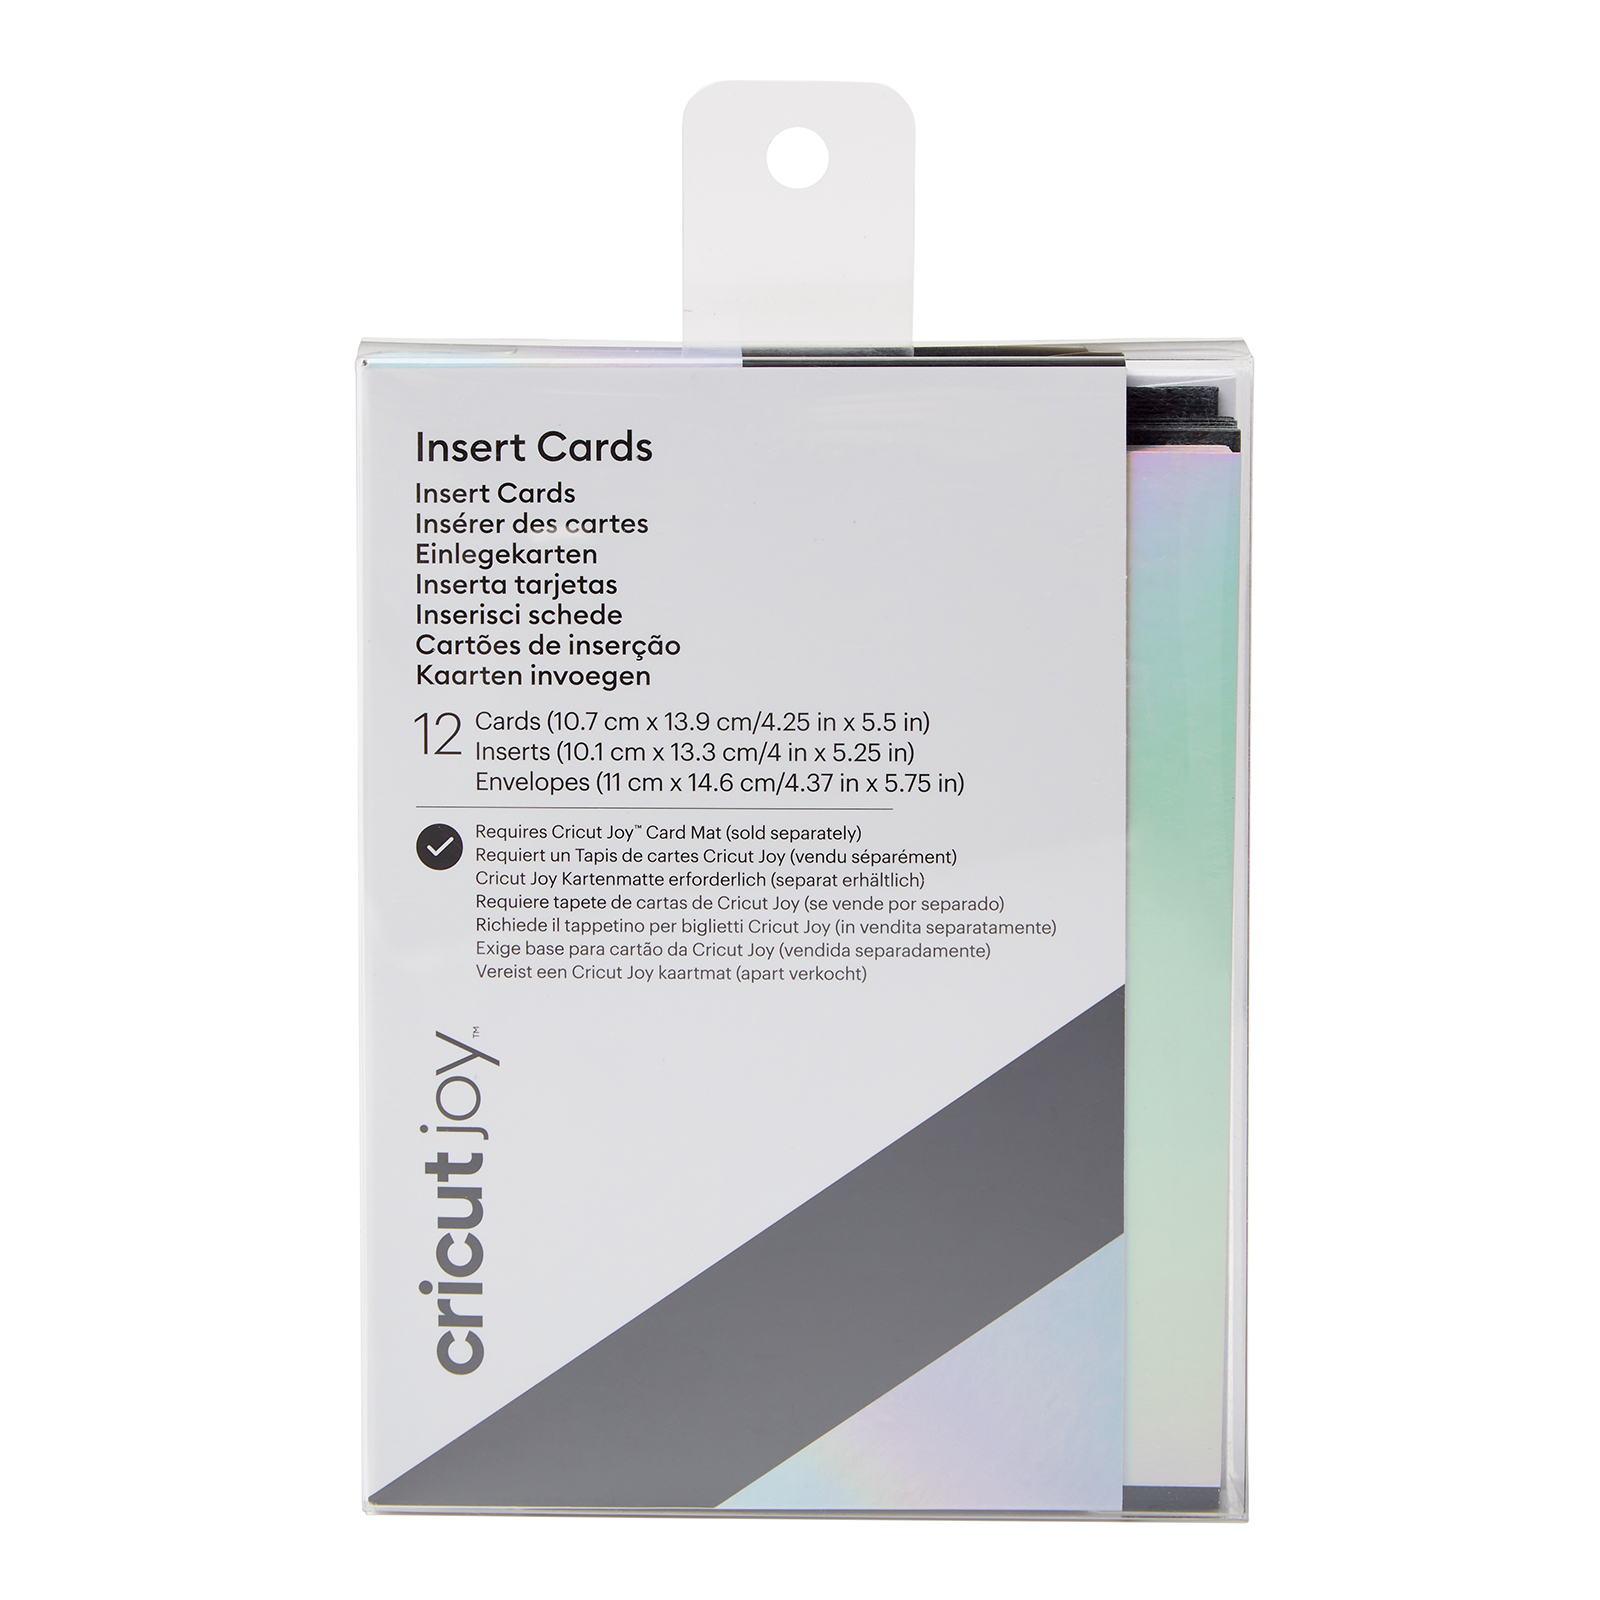 Cricut Joy • Insert Cards Black Silver Holografic 5.5x4.25" 12 sheets